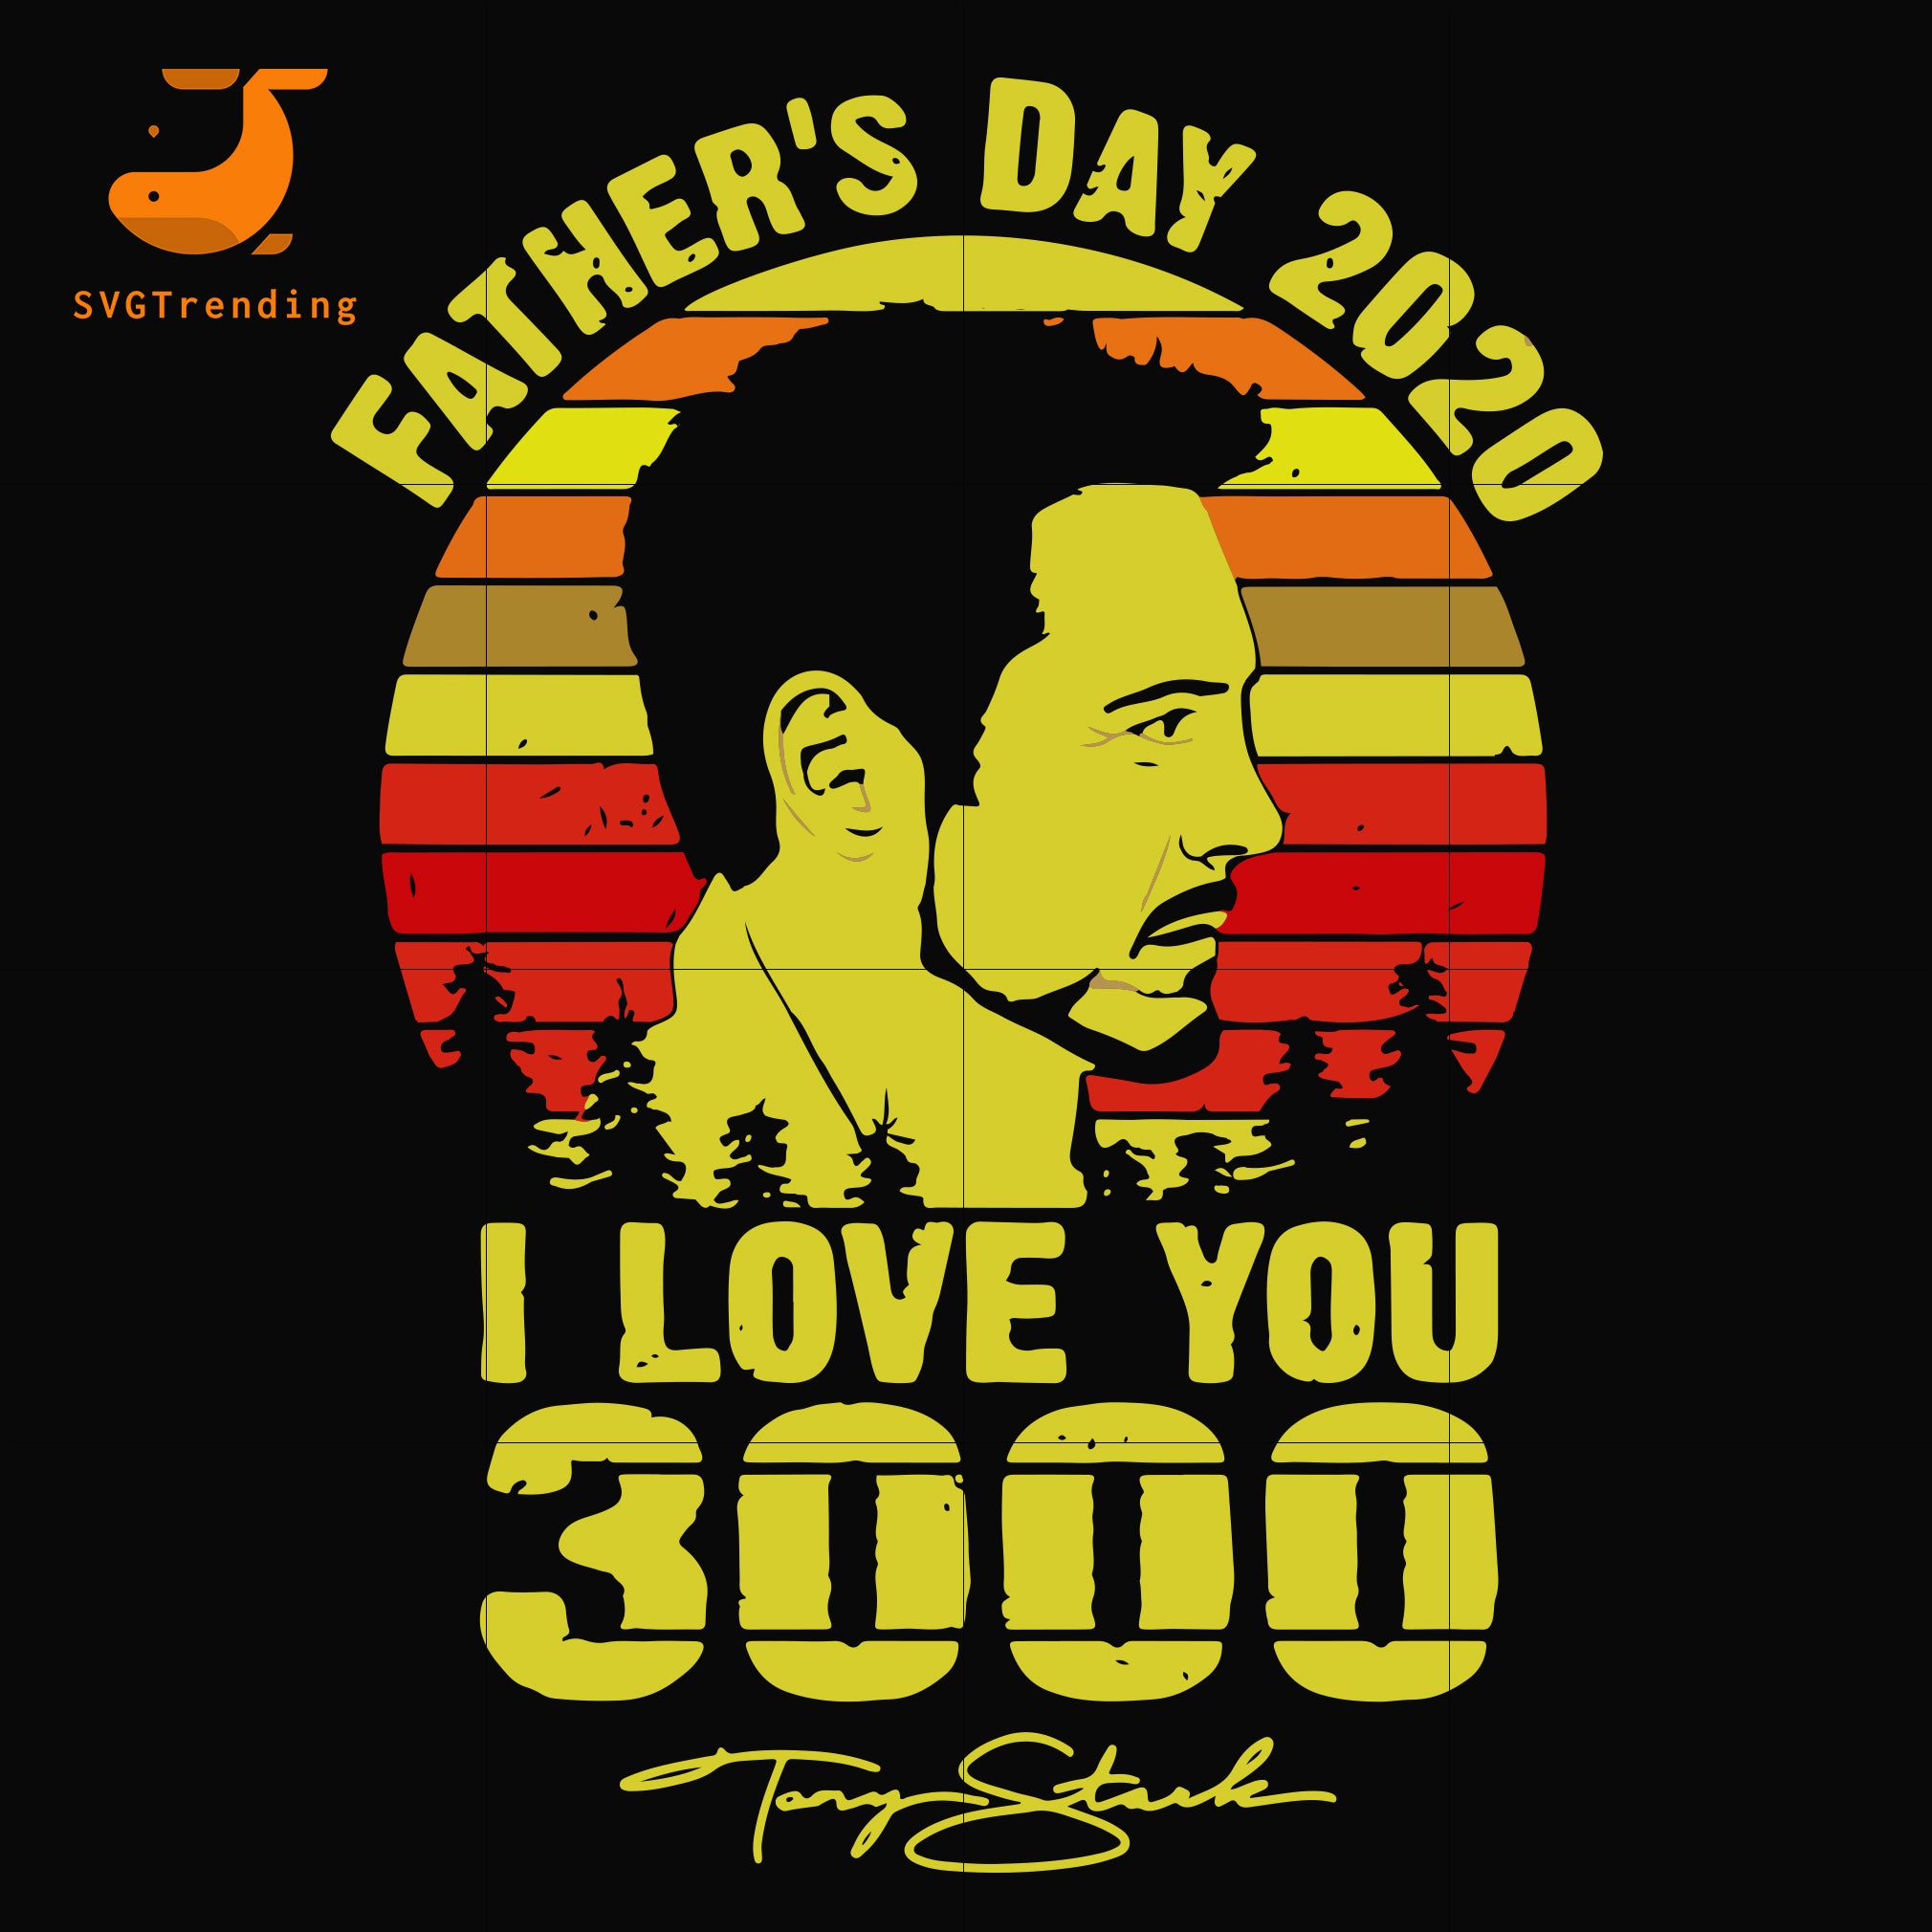 Father S Day 2020 I Love You 3000 Svg Png Dxf Eps Digital File Ftd7 Svgtrending